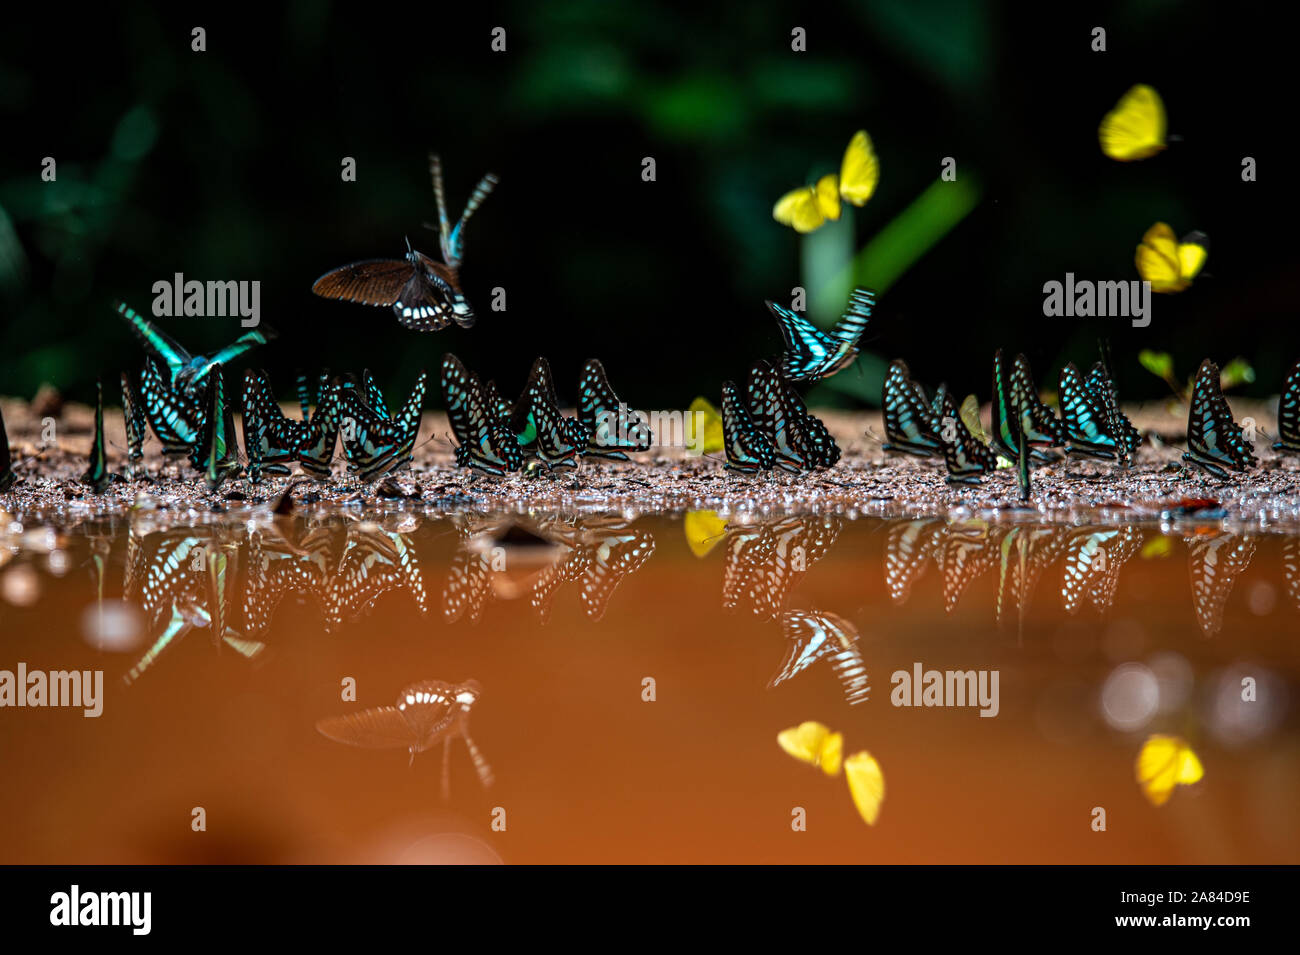 Flattern Flug Mechanismen in Insekten Stockfoto